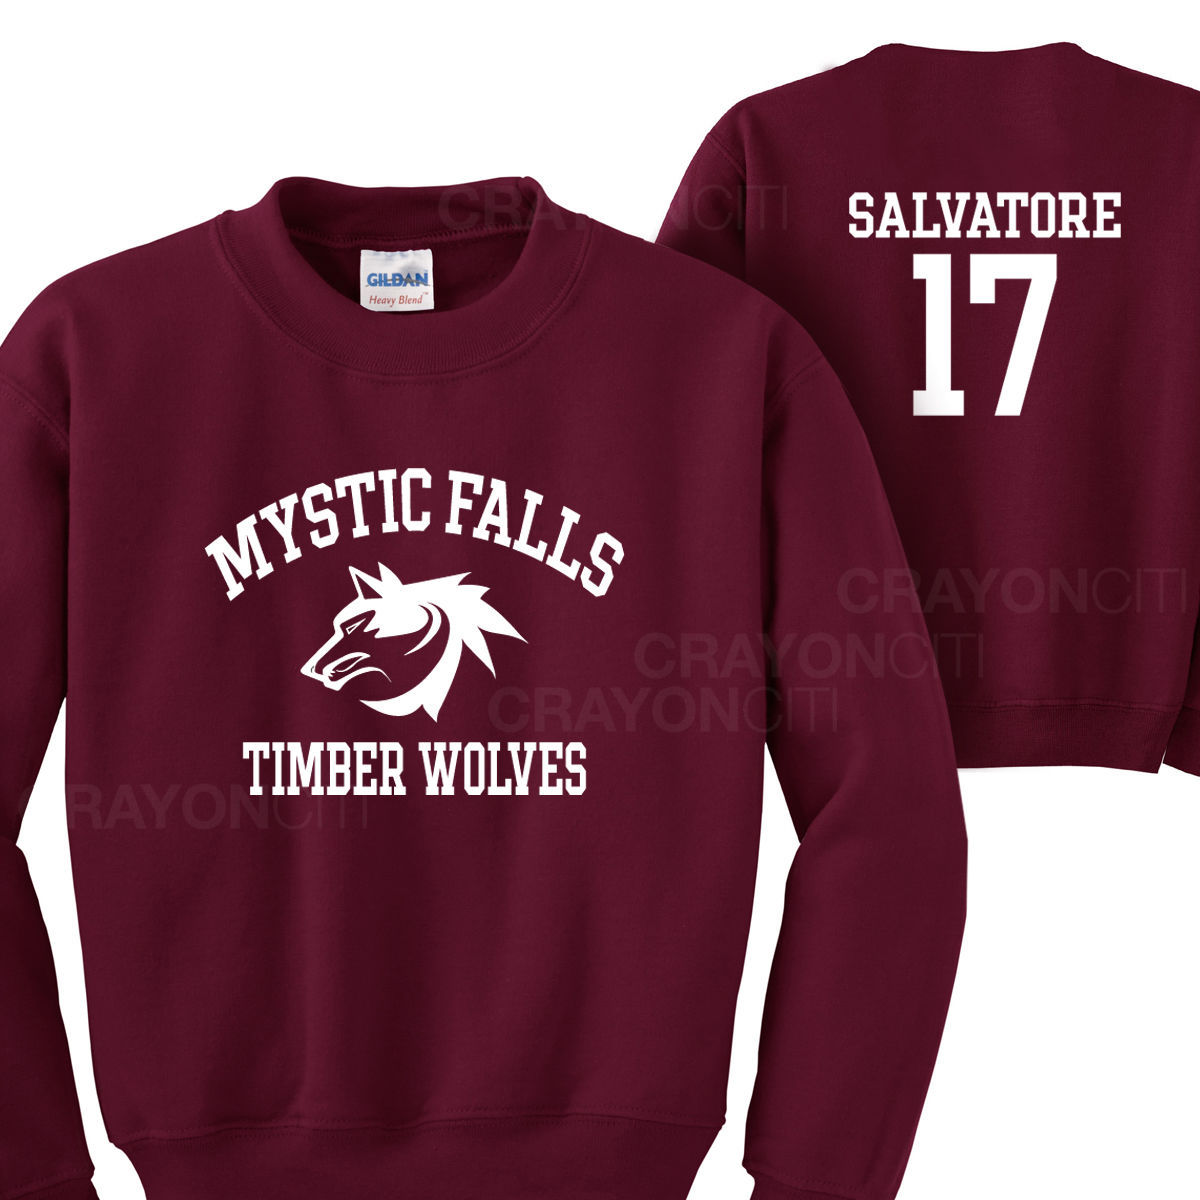 Mystic Falls Vampire Diaries Sweatshirt - $24.02 - $27.76